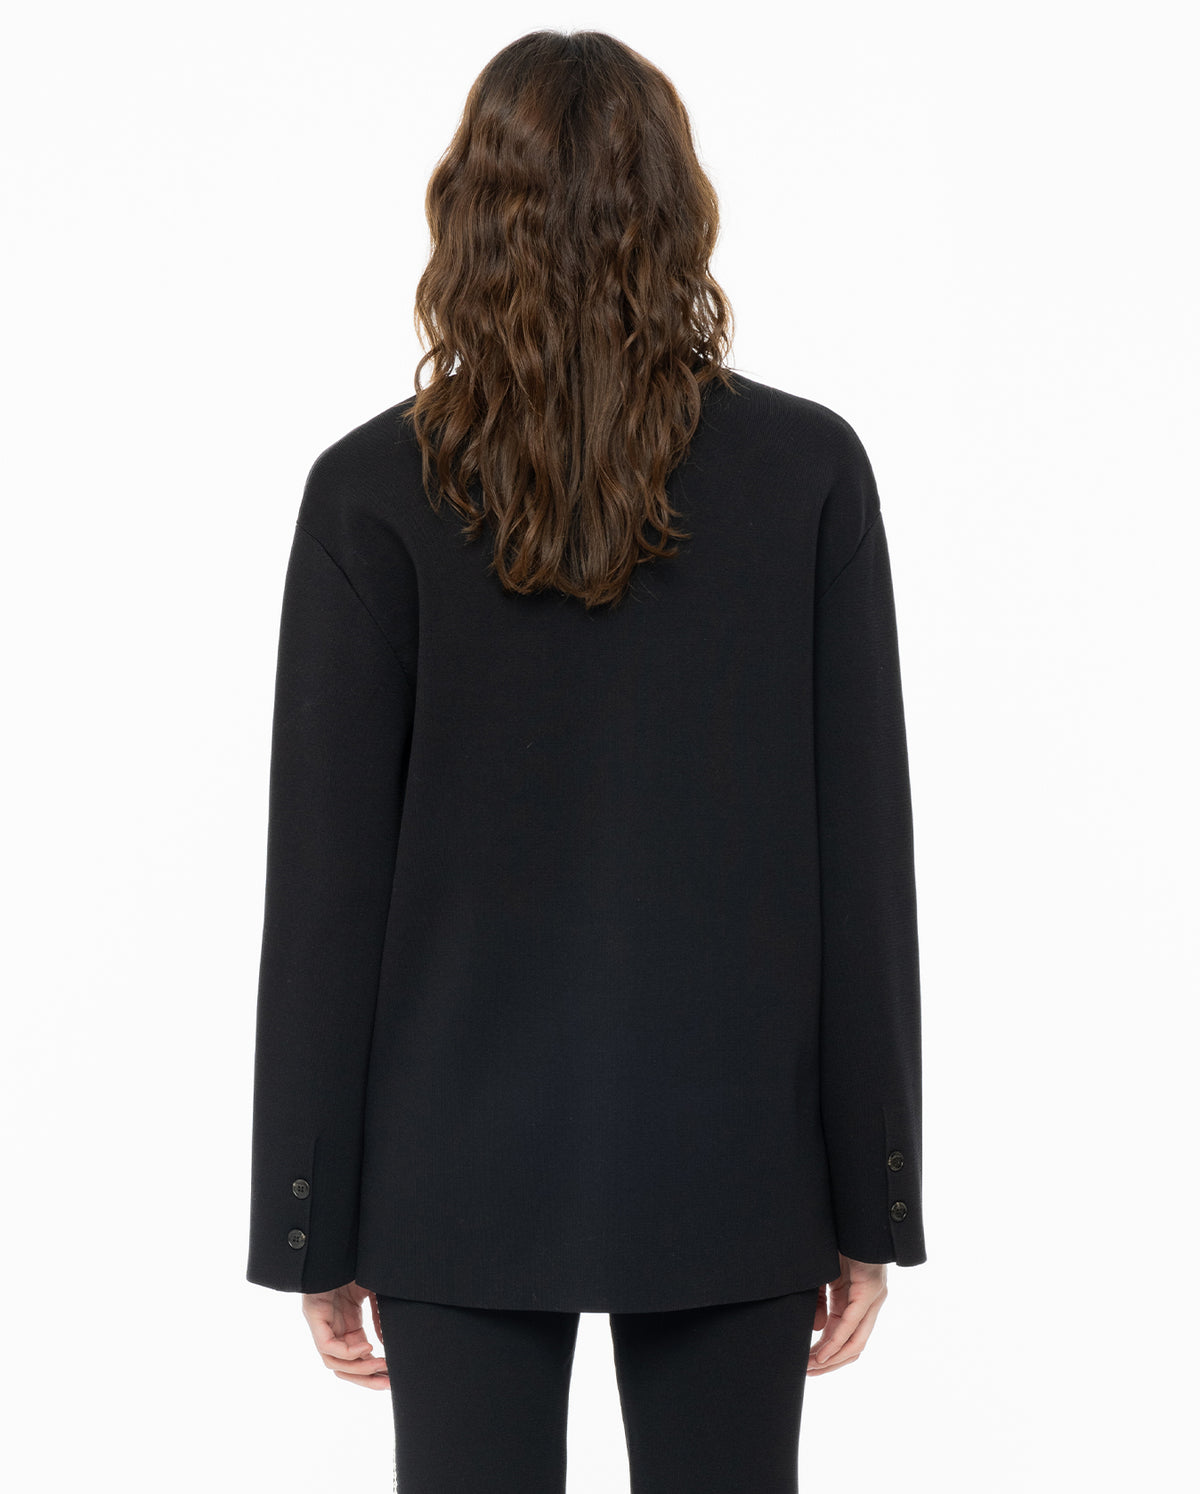 Silvia Shirt In Black/Creme